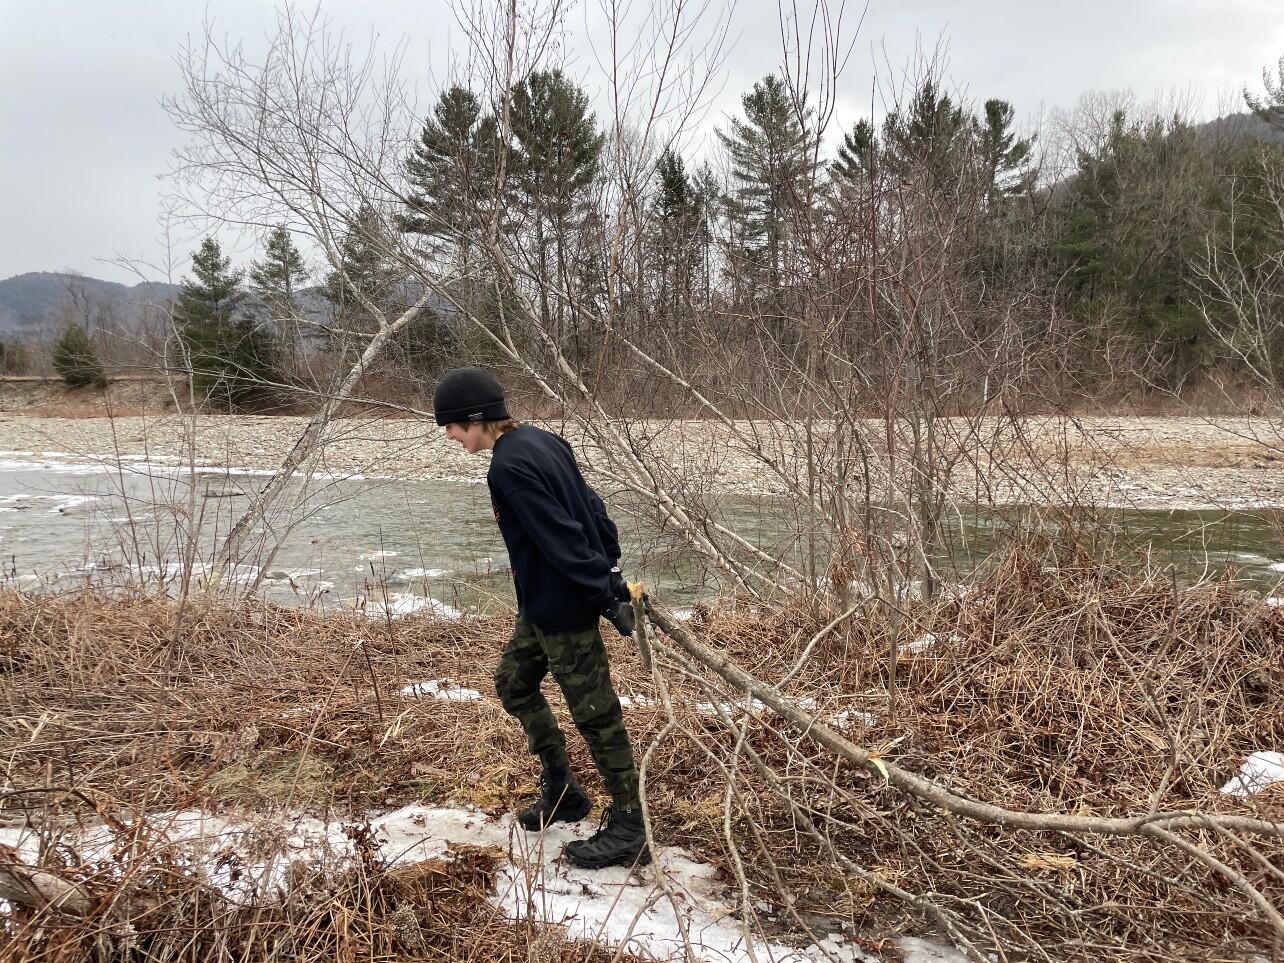 A JCT dragging brush along the River Trail.